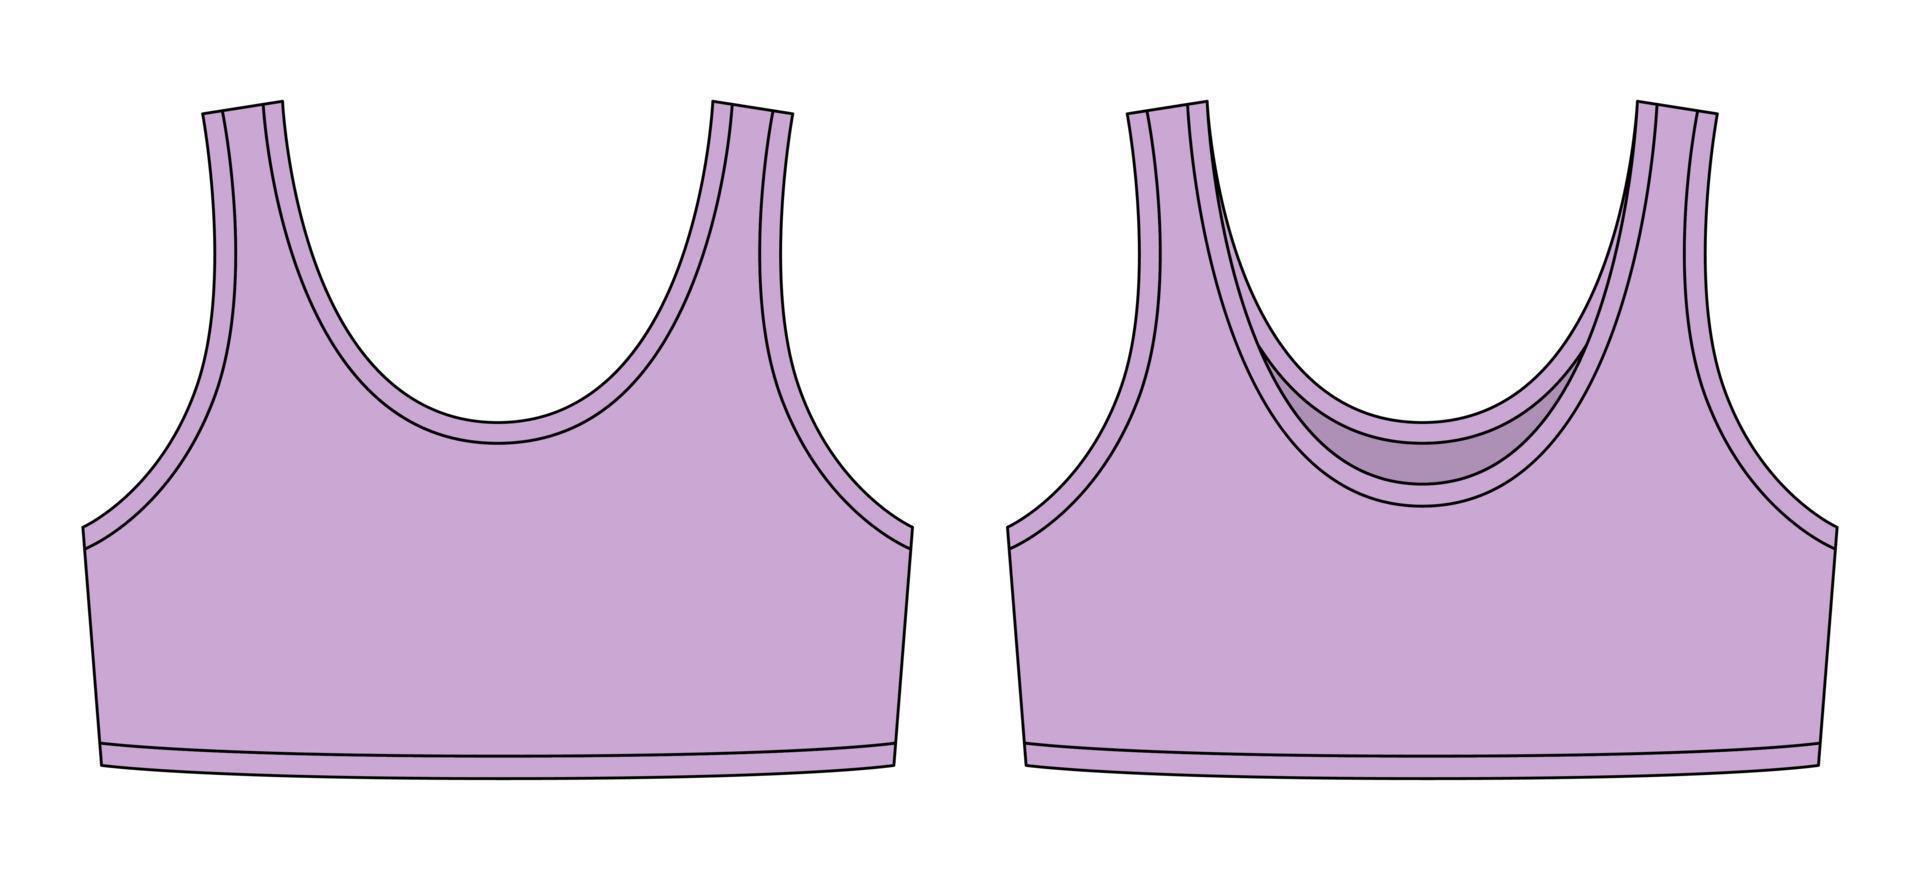 Girl bra technical sketch illustration. Pastel purple color